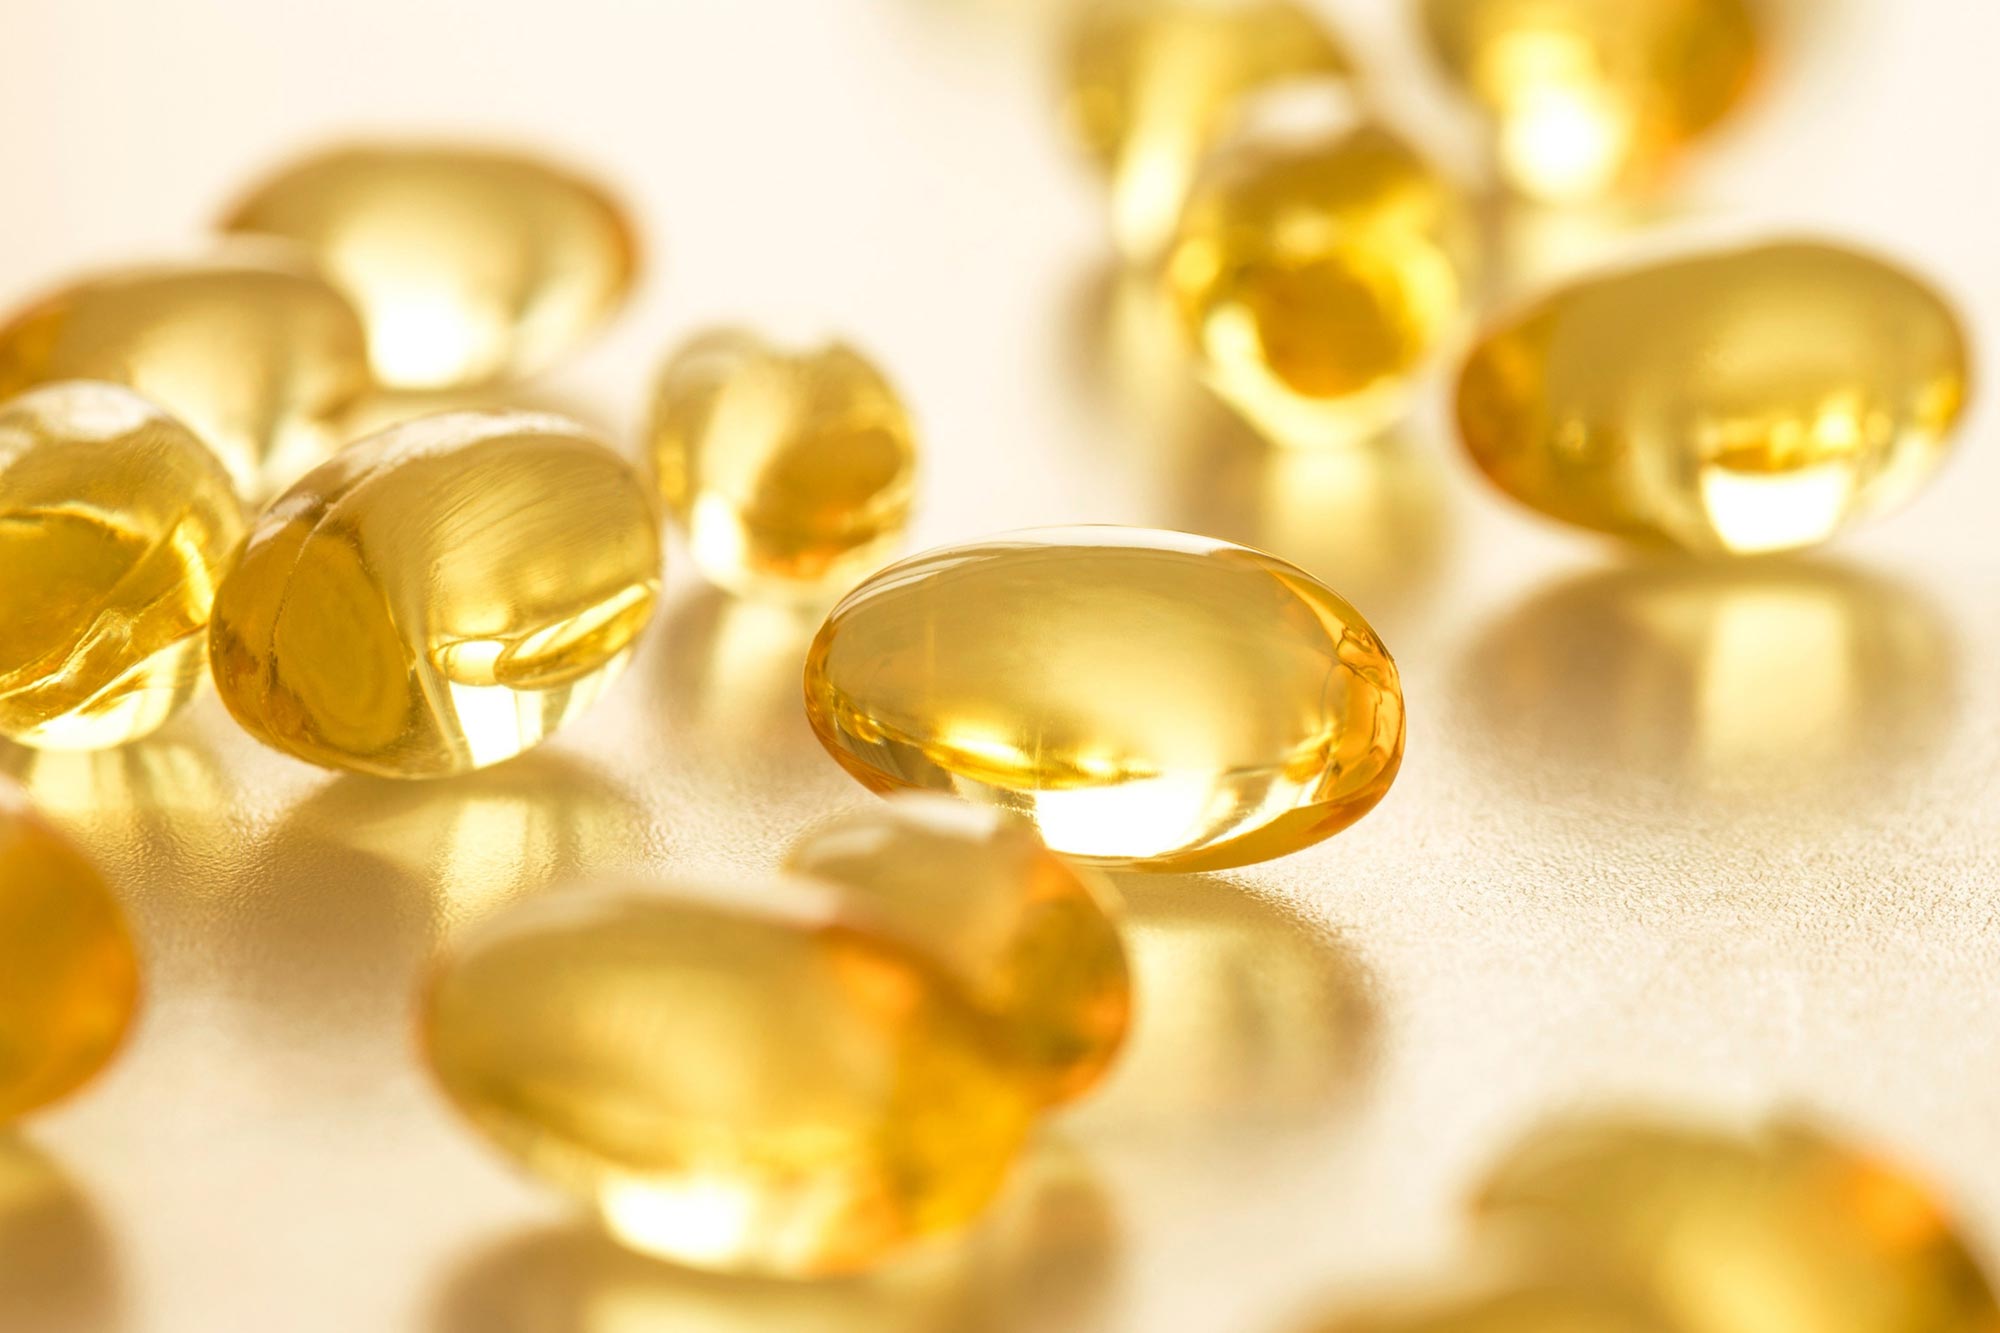 Study Finds Vitamin D Supplements Do Not Reduce Risk of Broken Bones